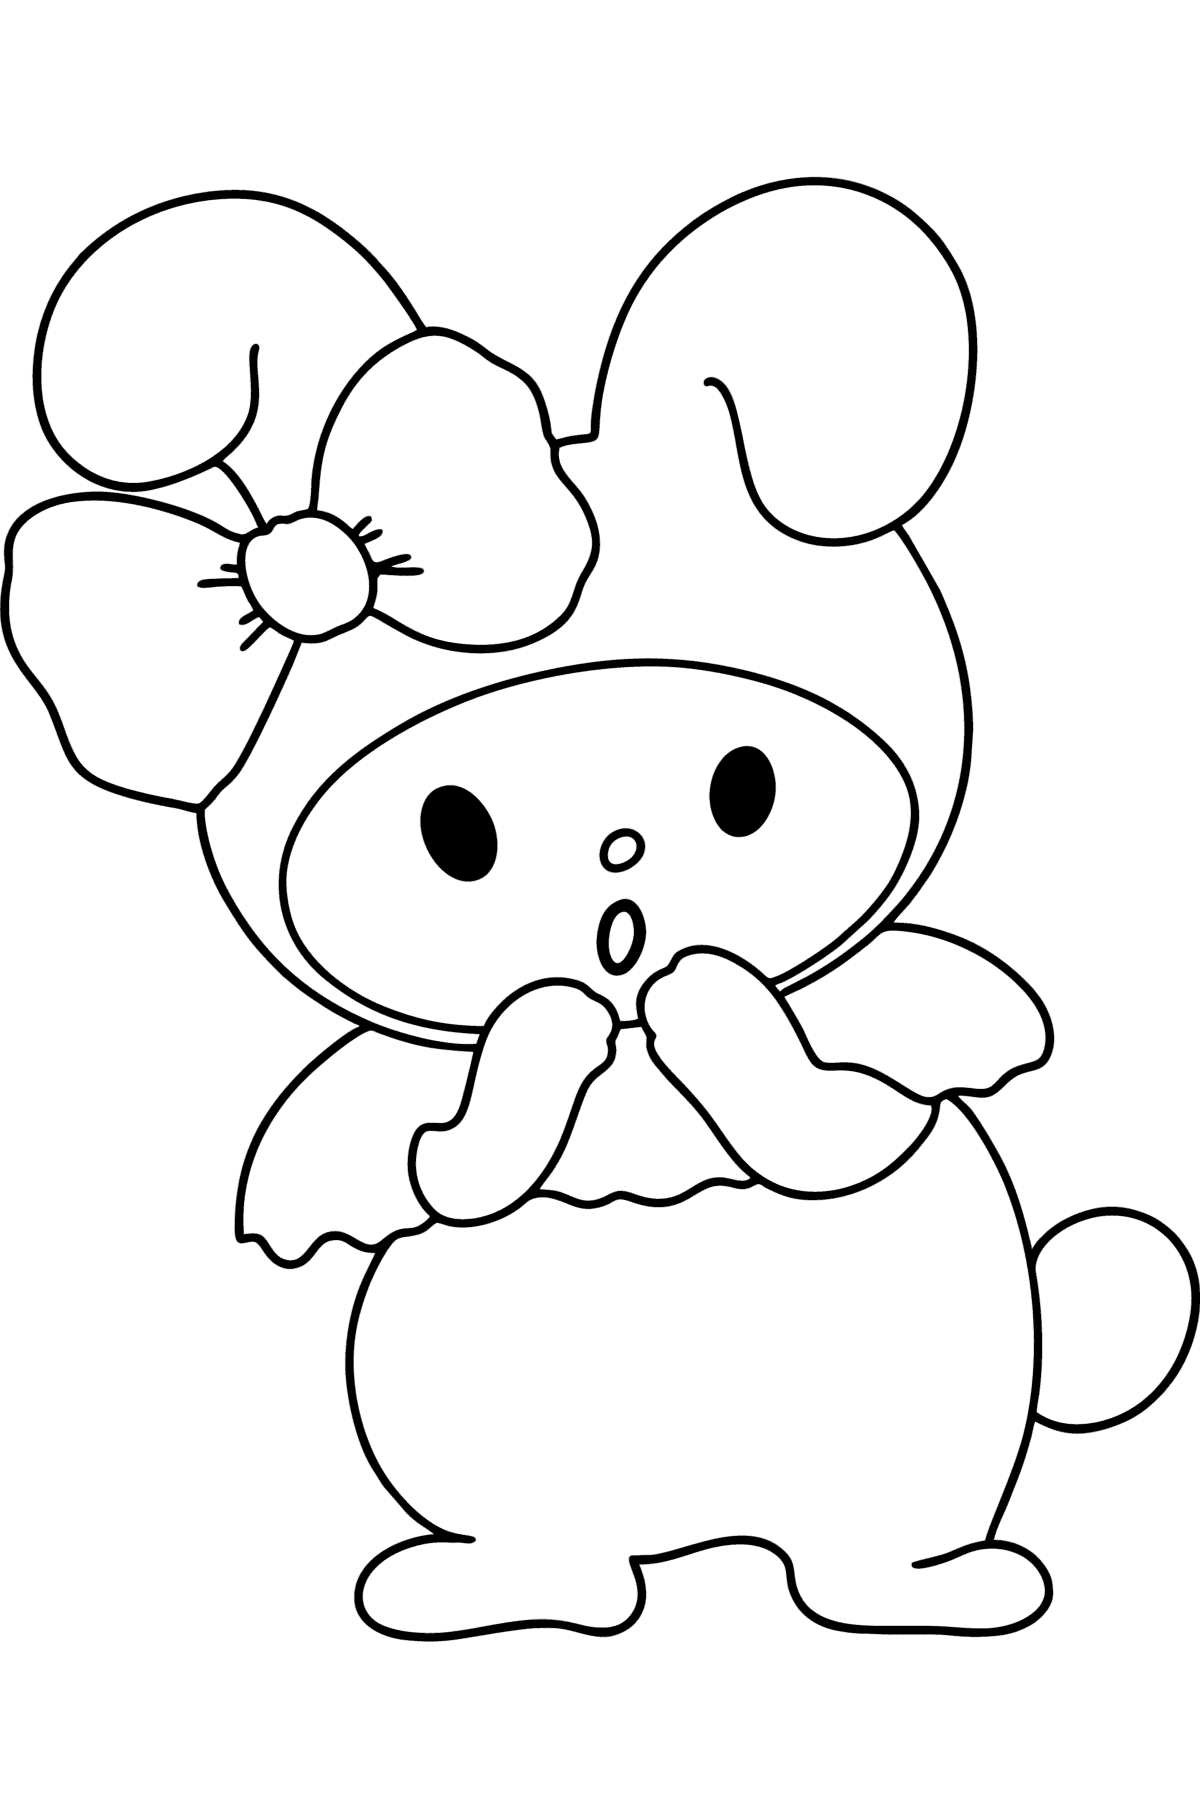 Dibujo de Hello Kitty My Melody para colorear - Dibujos para Colorear para Niños